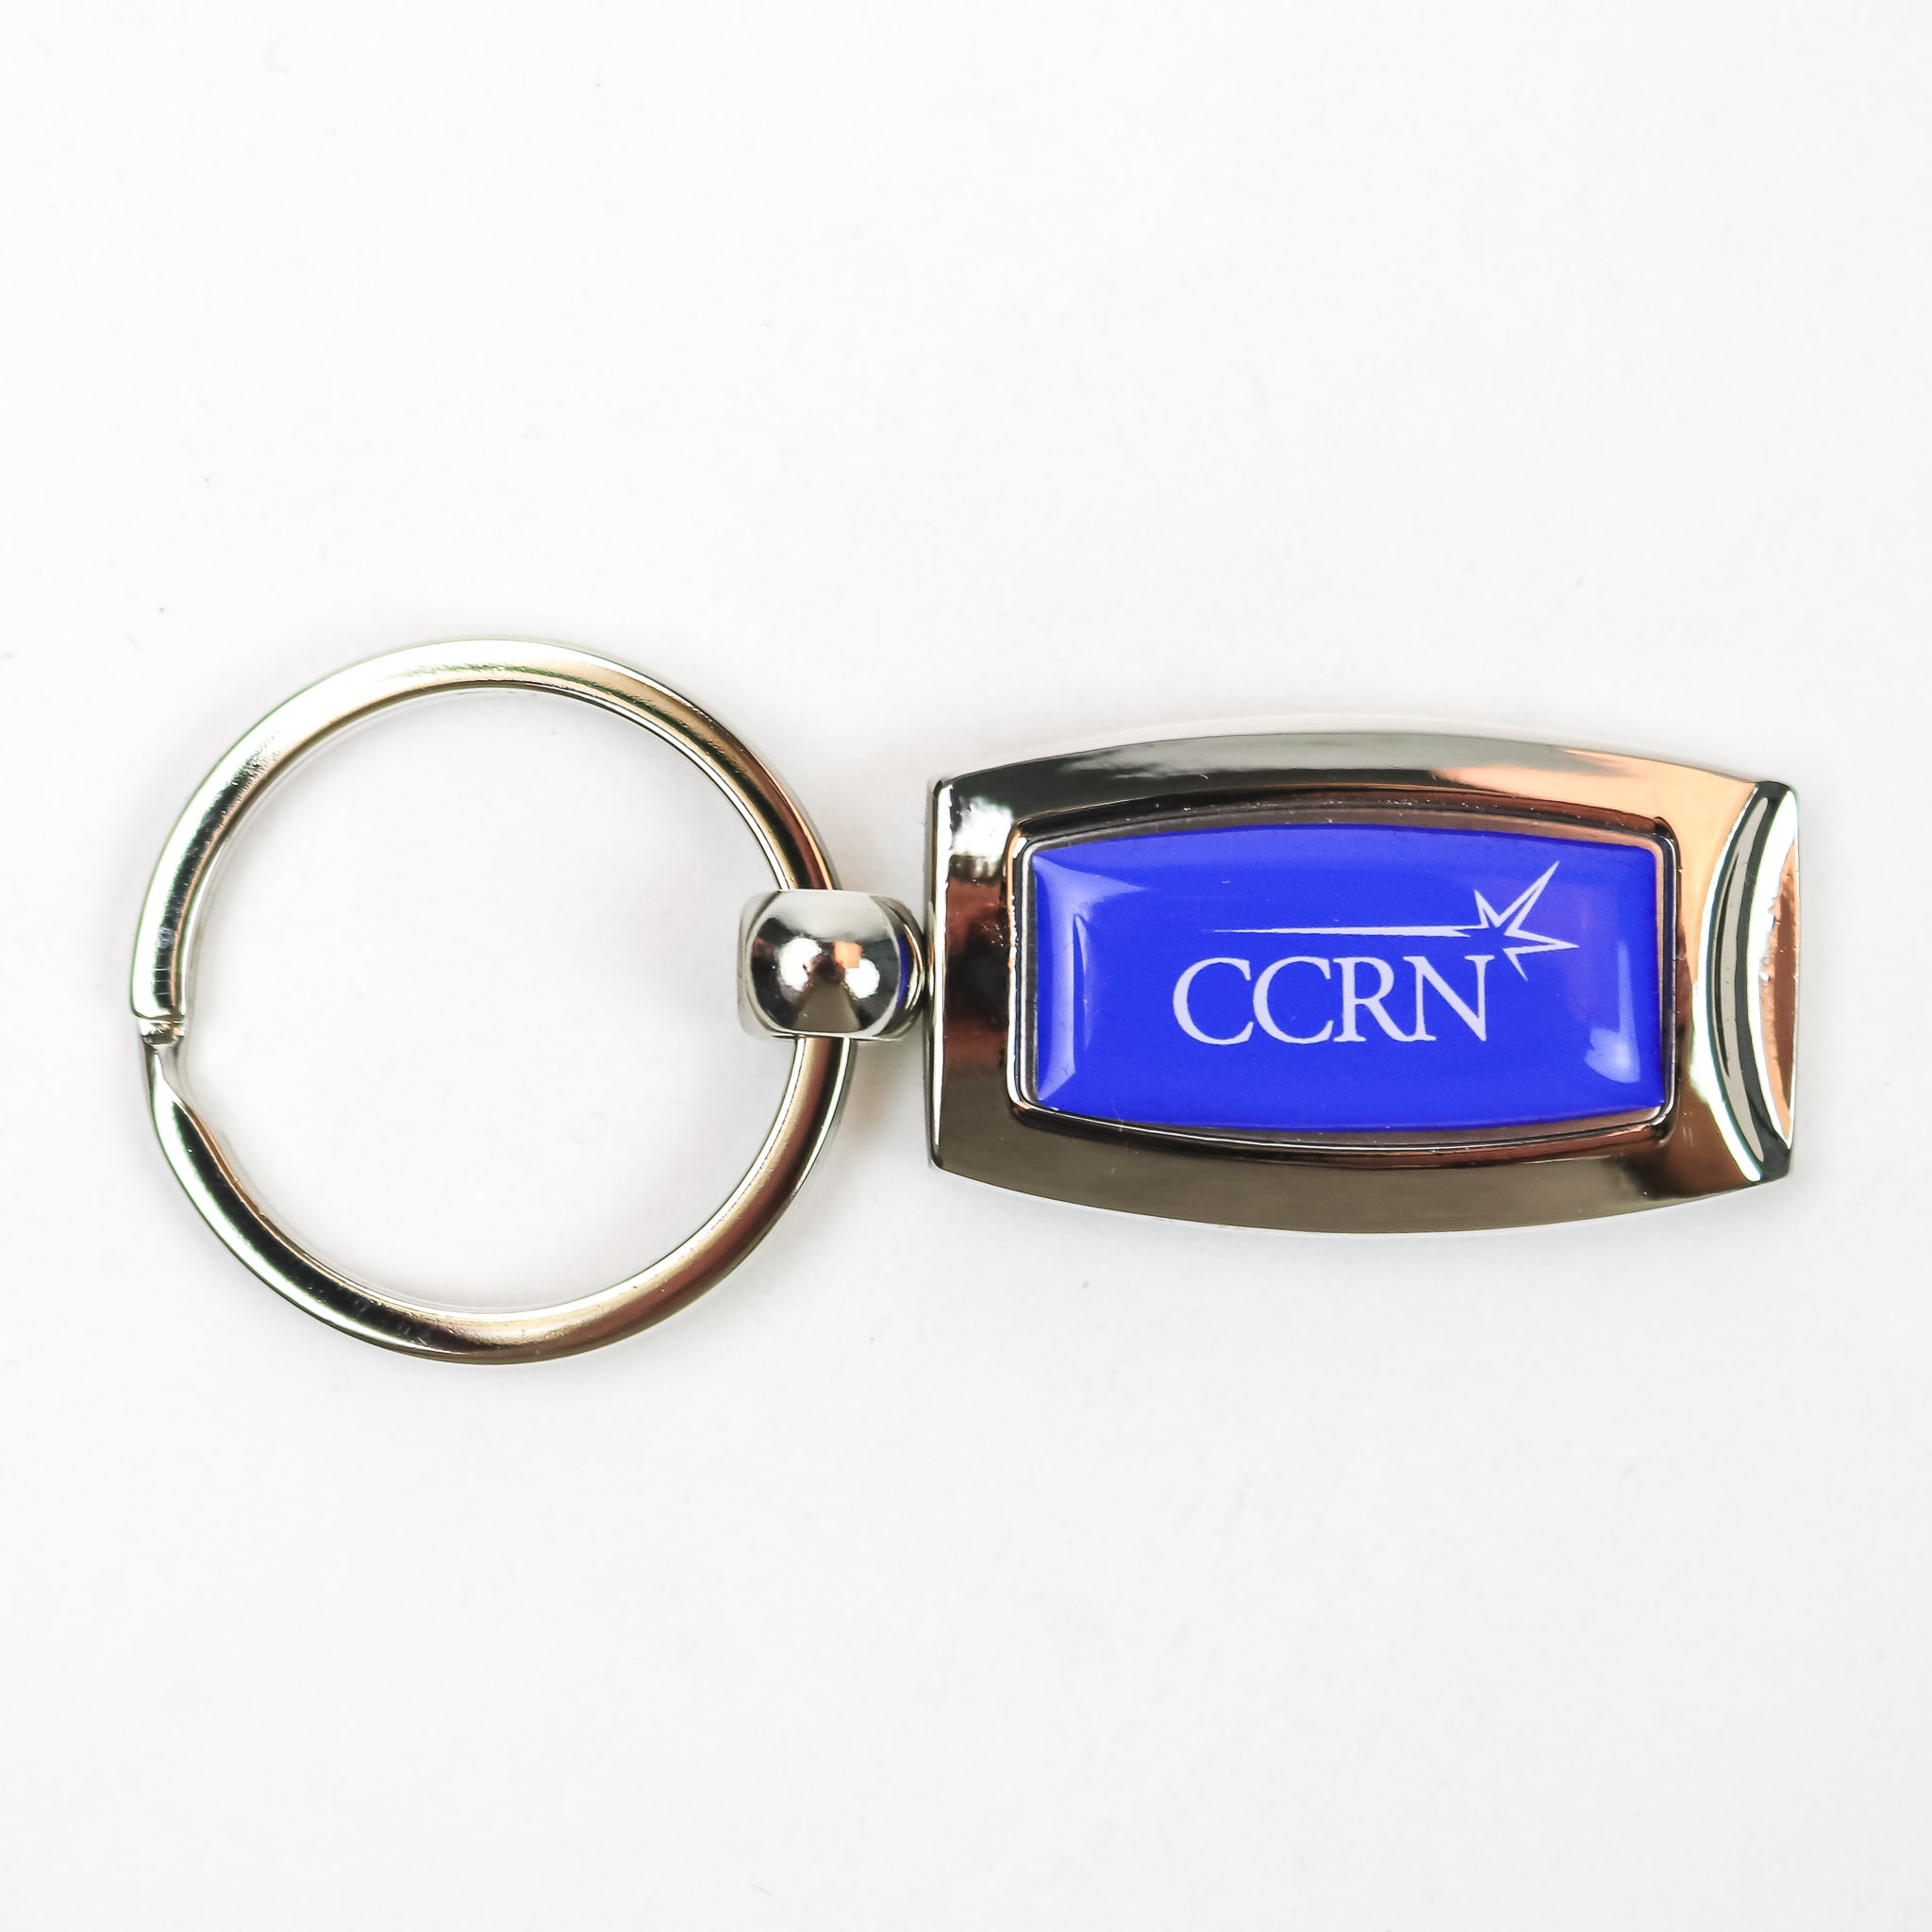 CCRN Key Ring